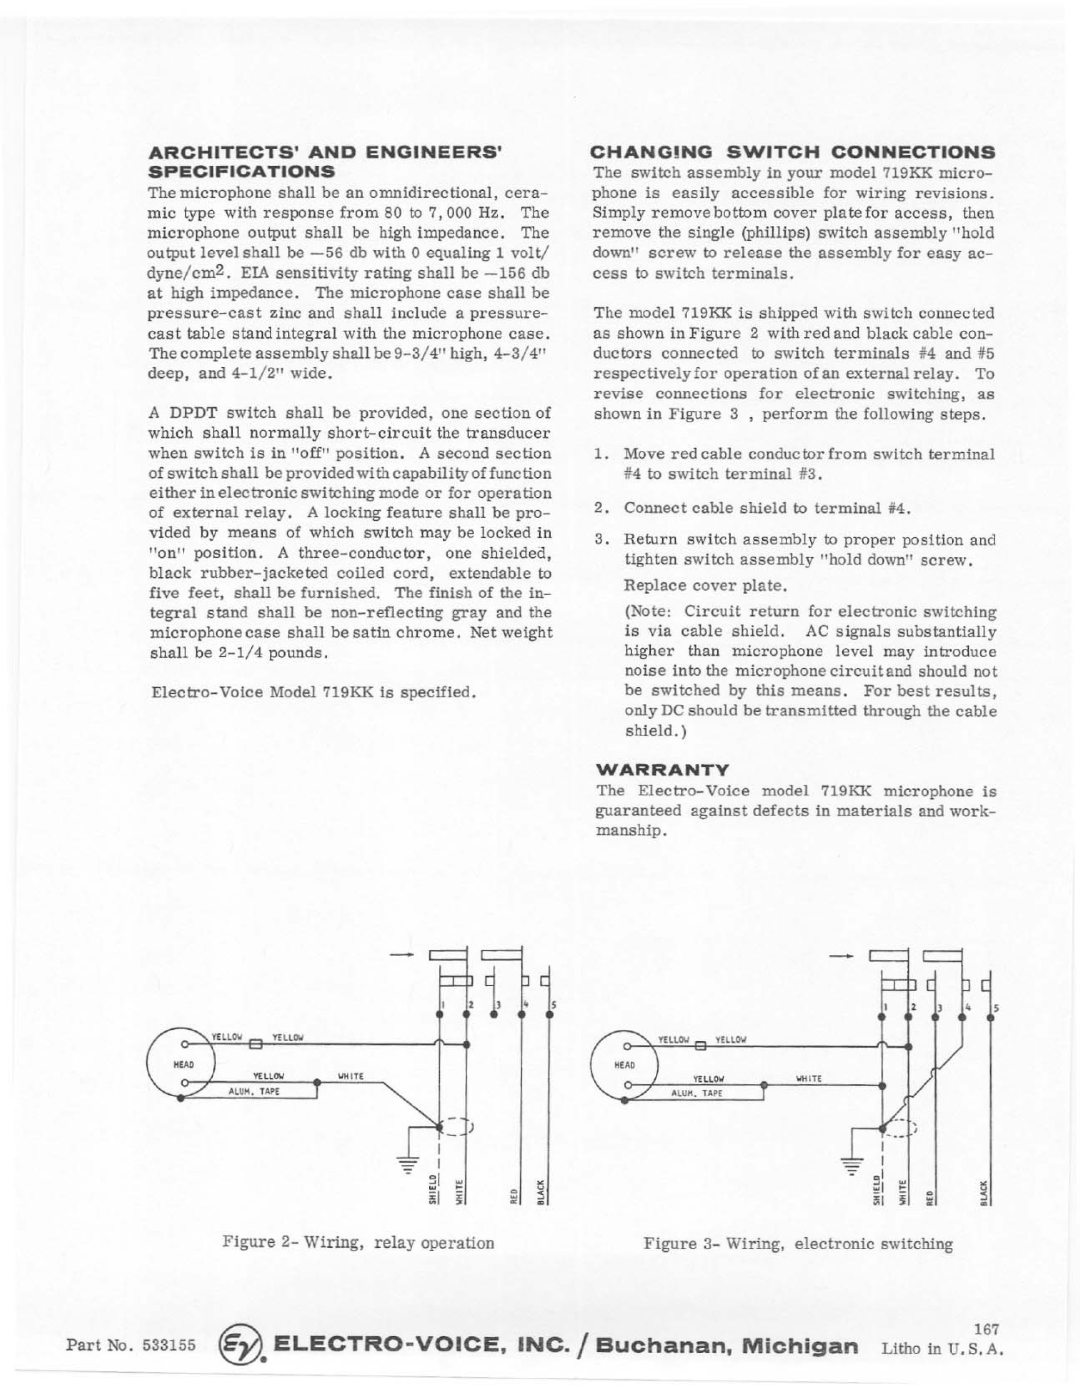 Electro-Voice 719KK manual 